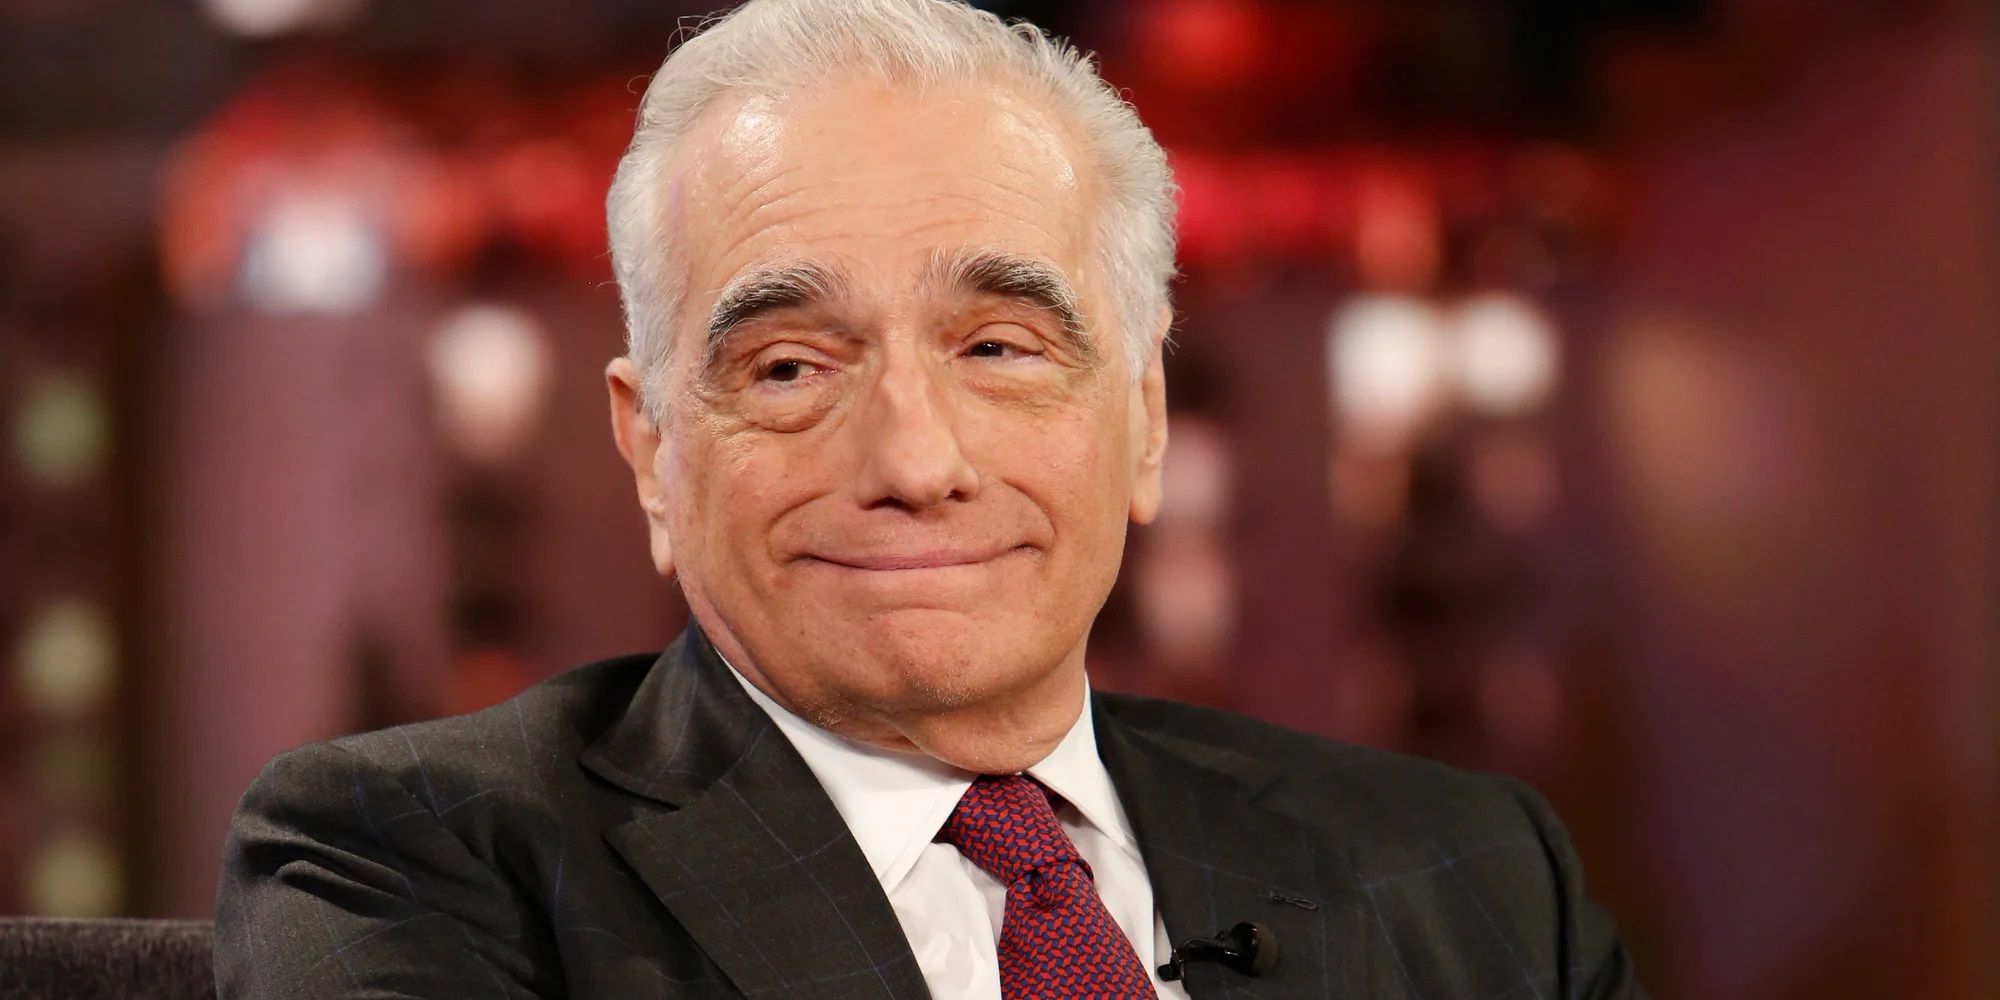 Martin Scorsese on a late-night talk show